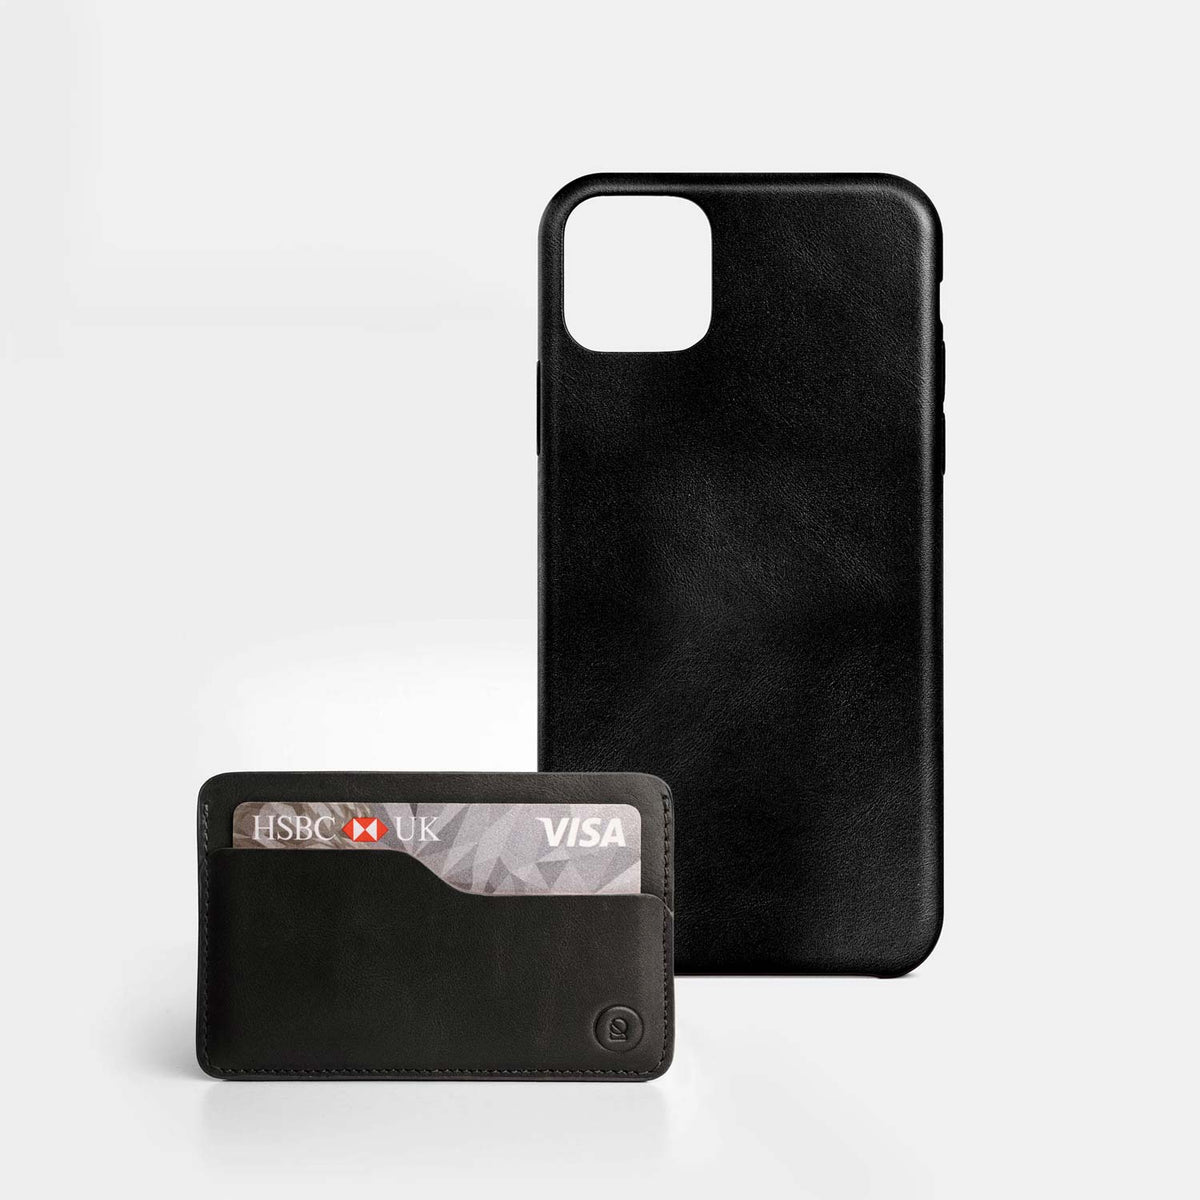 Leather iPhone 12 Shell Case - Black - RYAN London